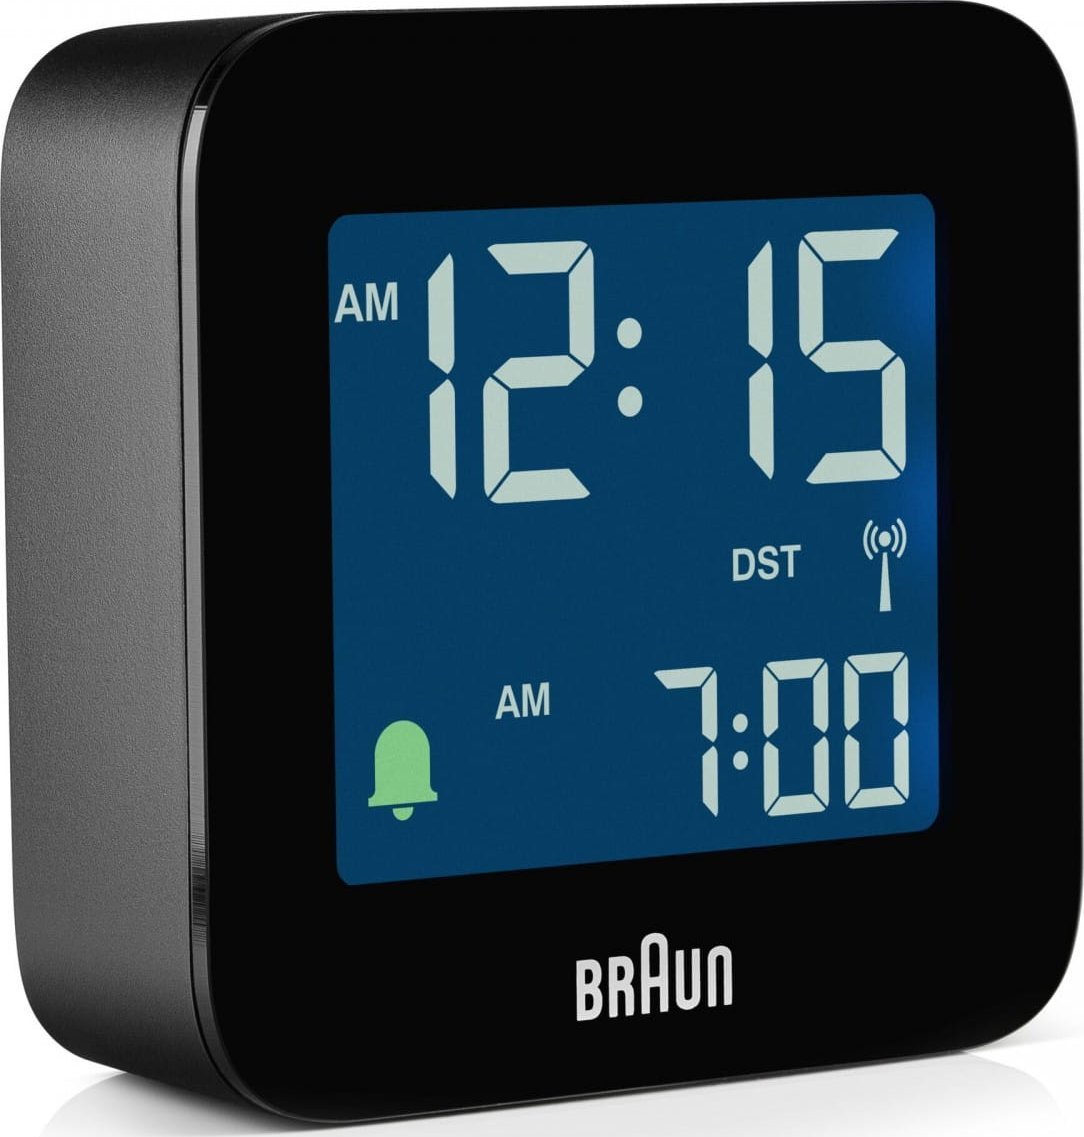 Ceasuri decorative - Braun Braun BC 08 B-DCF Funkwecker Multiband negru